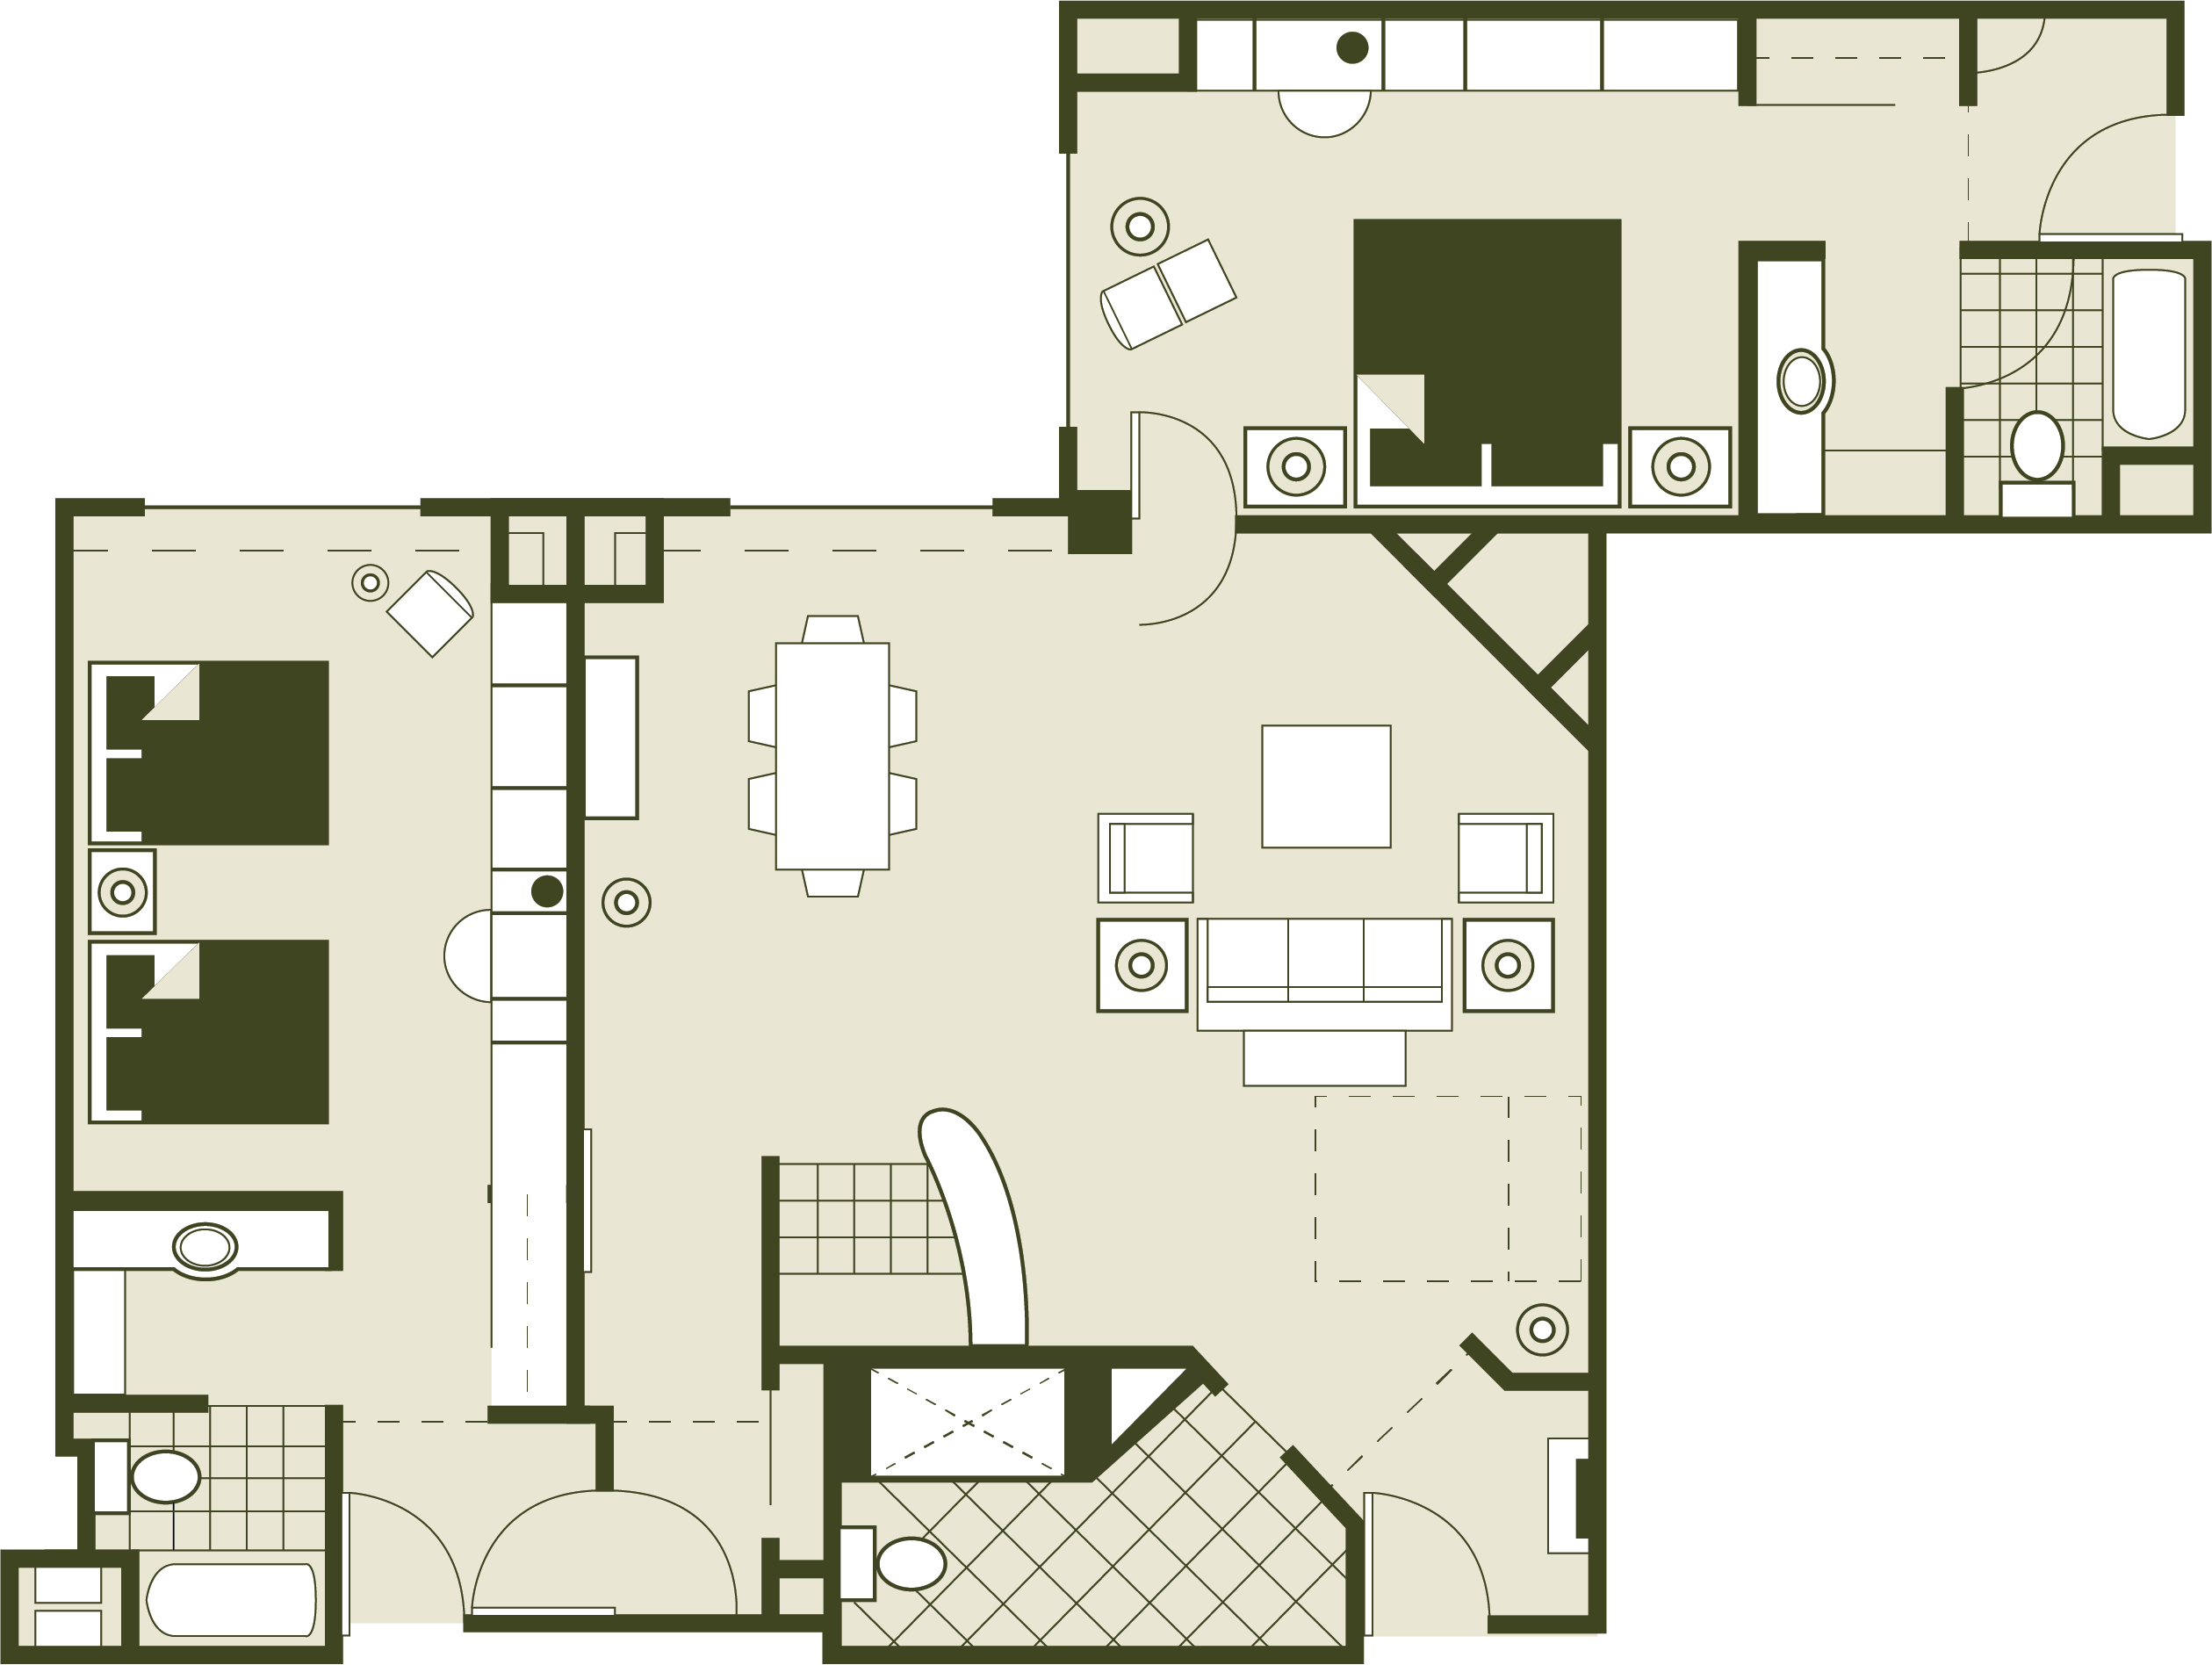 Executive Suite Floor Plan Floorplans Click